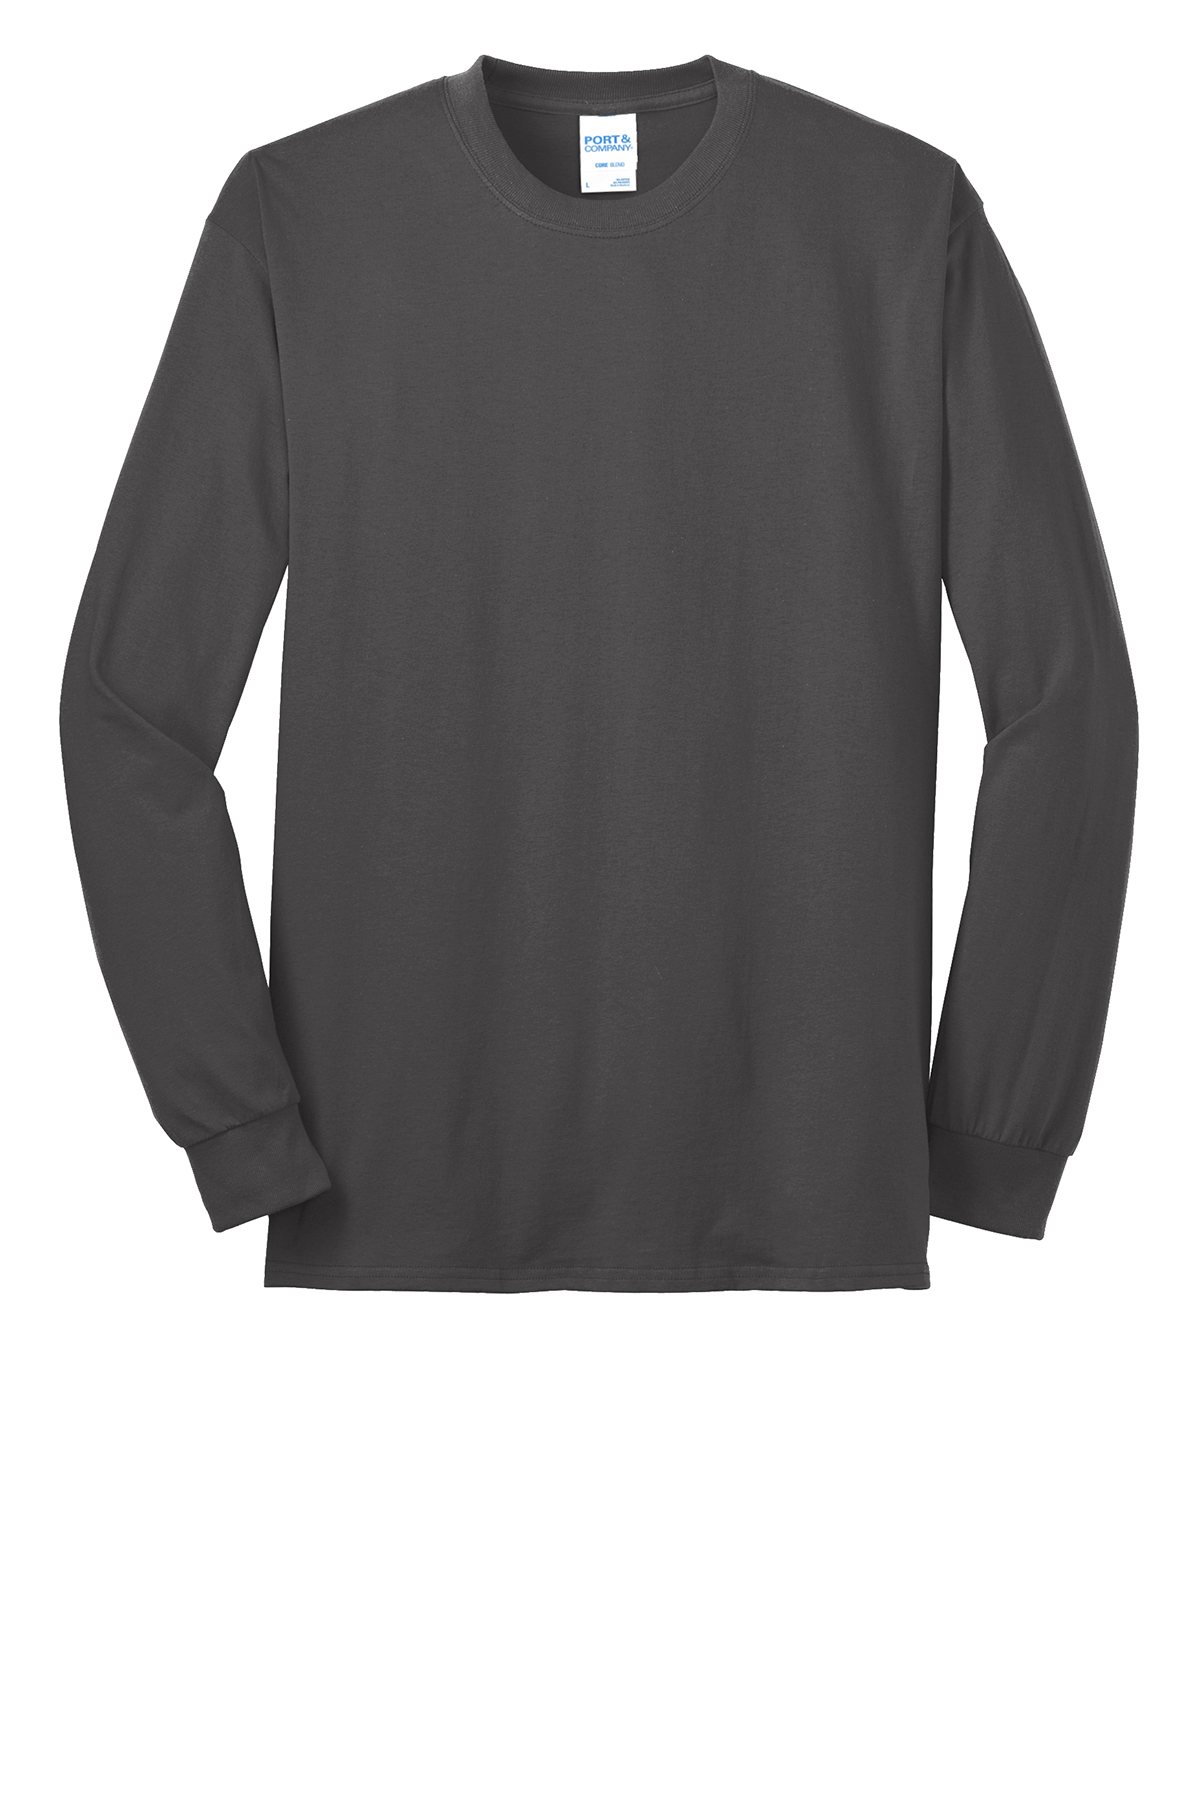 M O 3520 Poly-Blend Long Sleeve T-shirt - Heather Charcoal - L